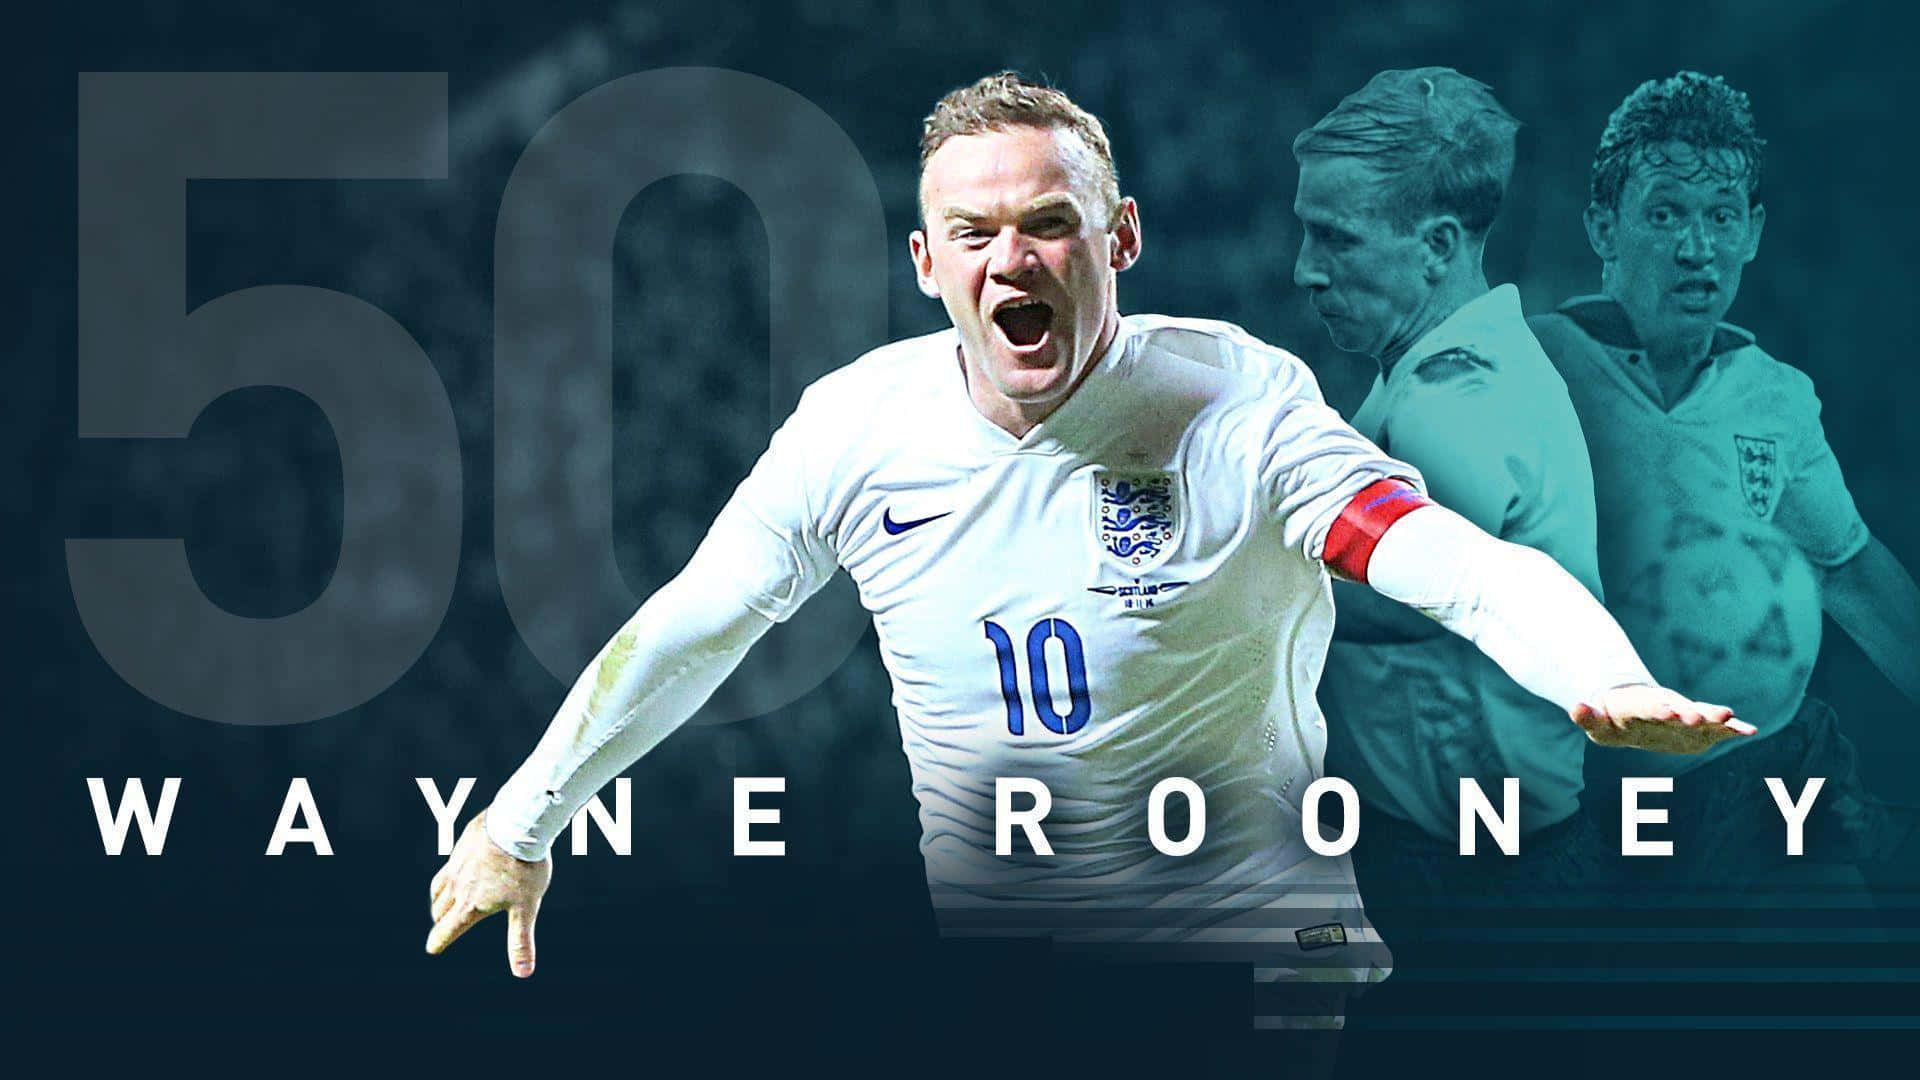 Wayne Rooney White Nike Shirt Picture